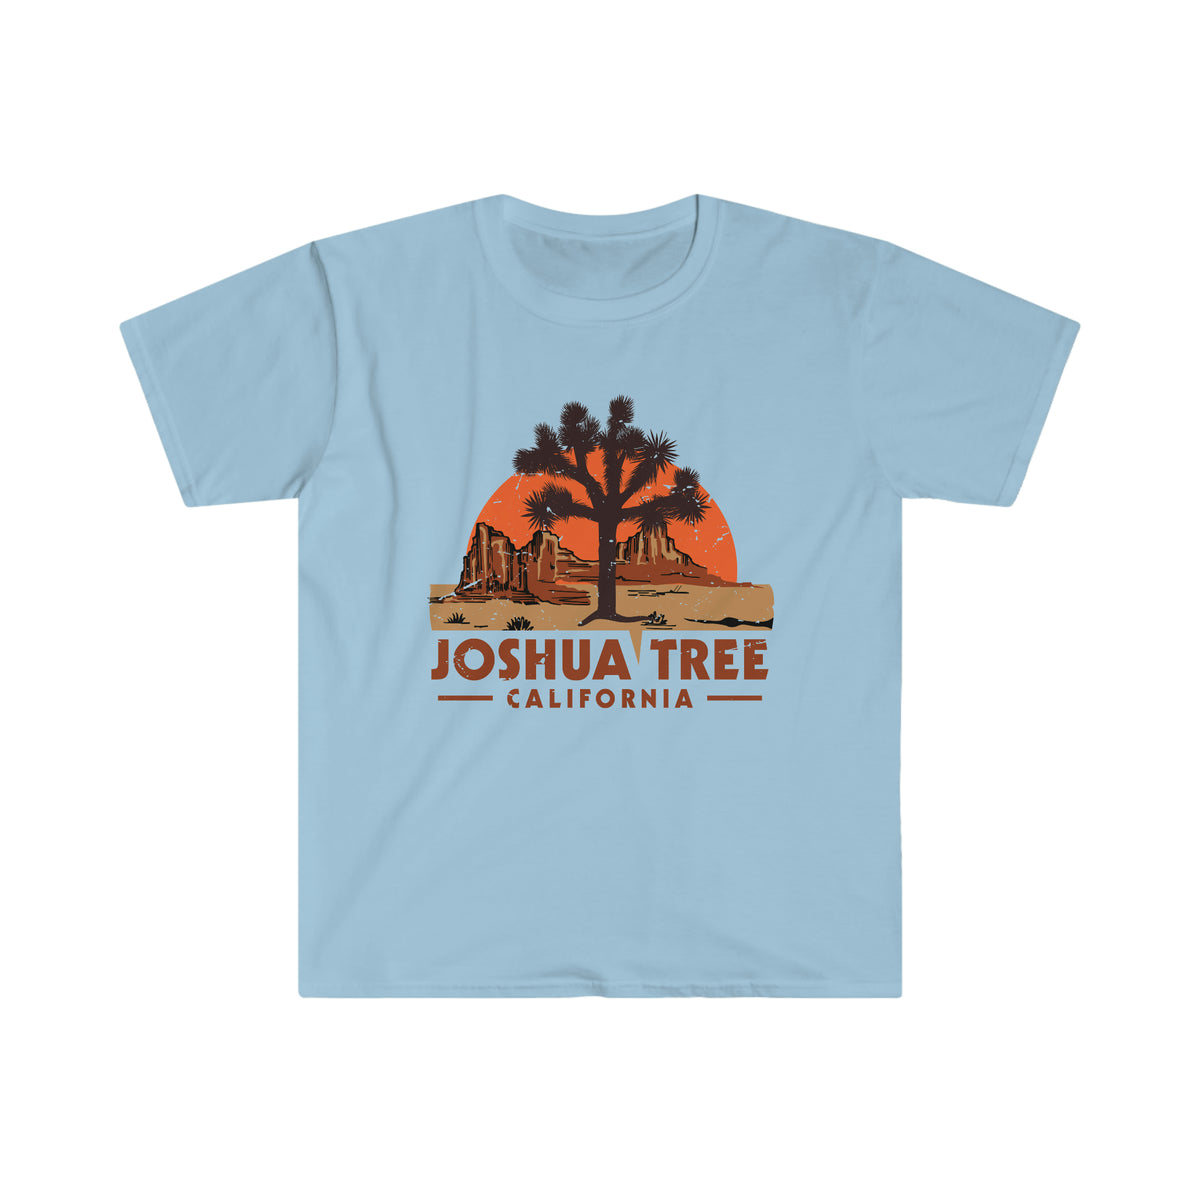 Joshua Tree California National Park Shirt | Outdoor Camping Shirt | Unisex Soft Style T-Shirt